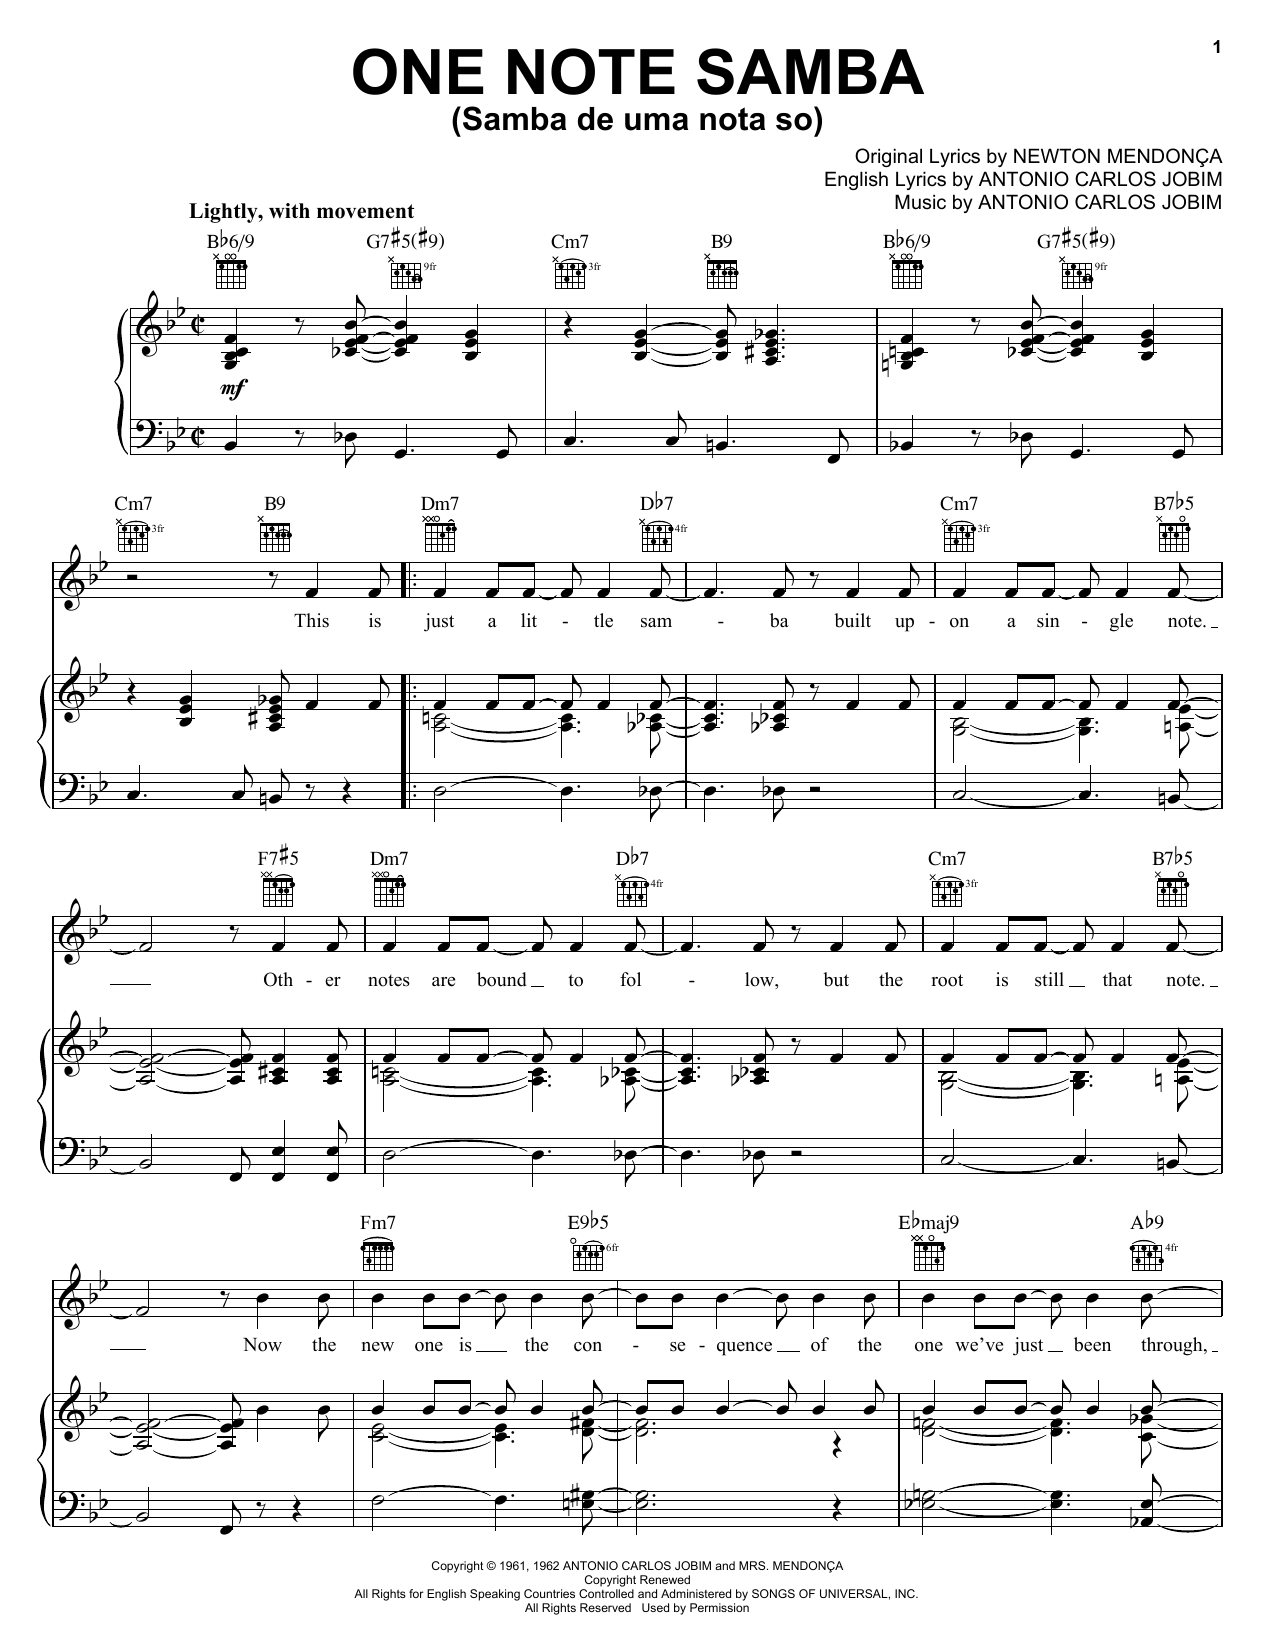 Antonio Carlos Jobim One Note Samba (Samba De Uma Nota So) Sheet Music Notes & Chords for Marimba Solo - Download or Print PDF